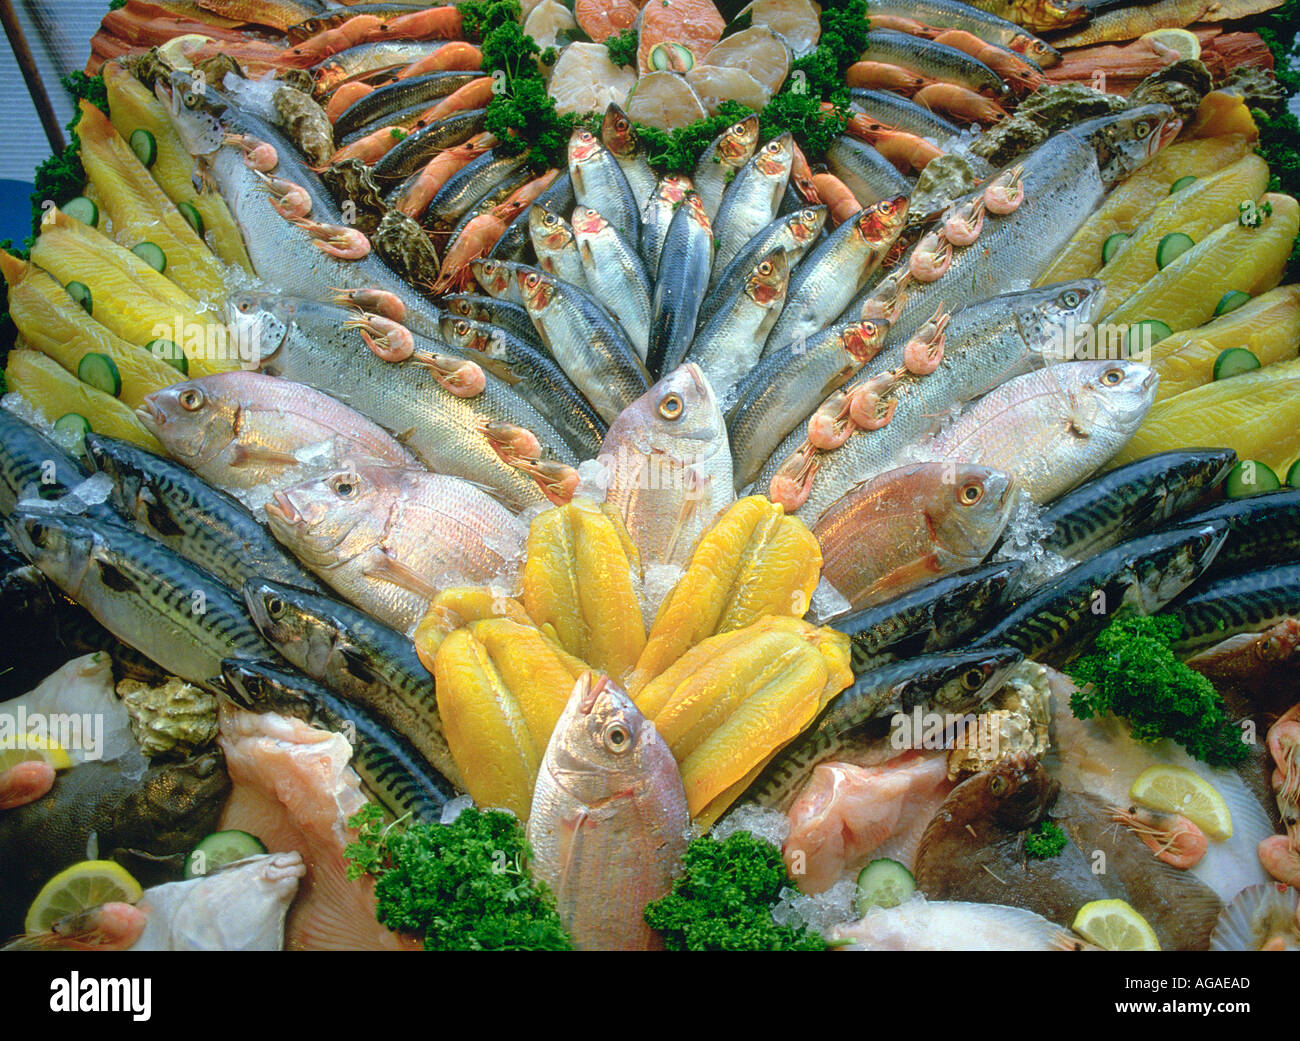 display of fresh sea food in market in Londo England Stock Photo